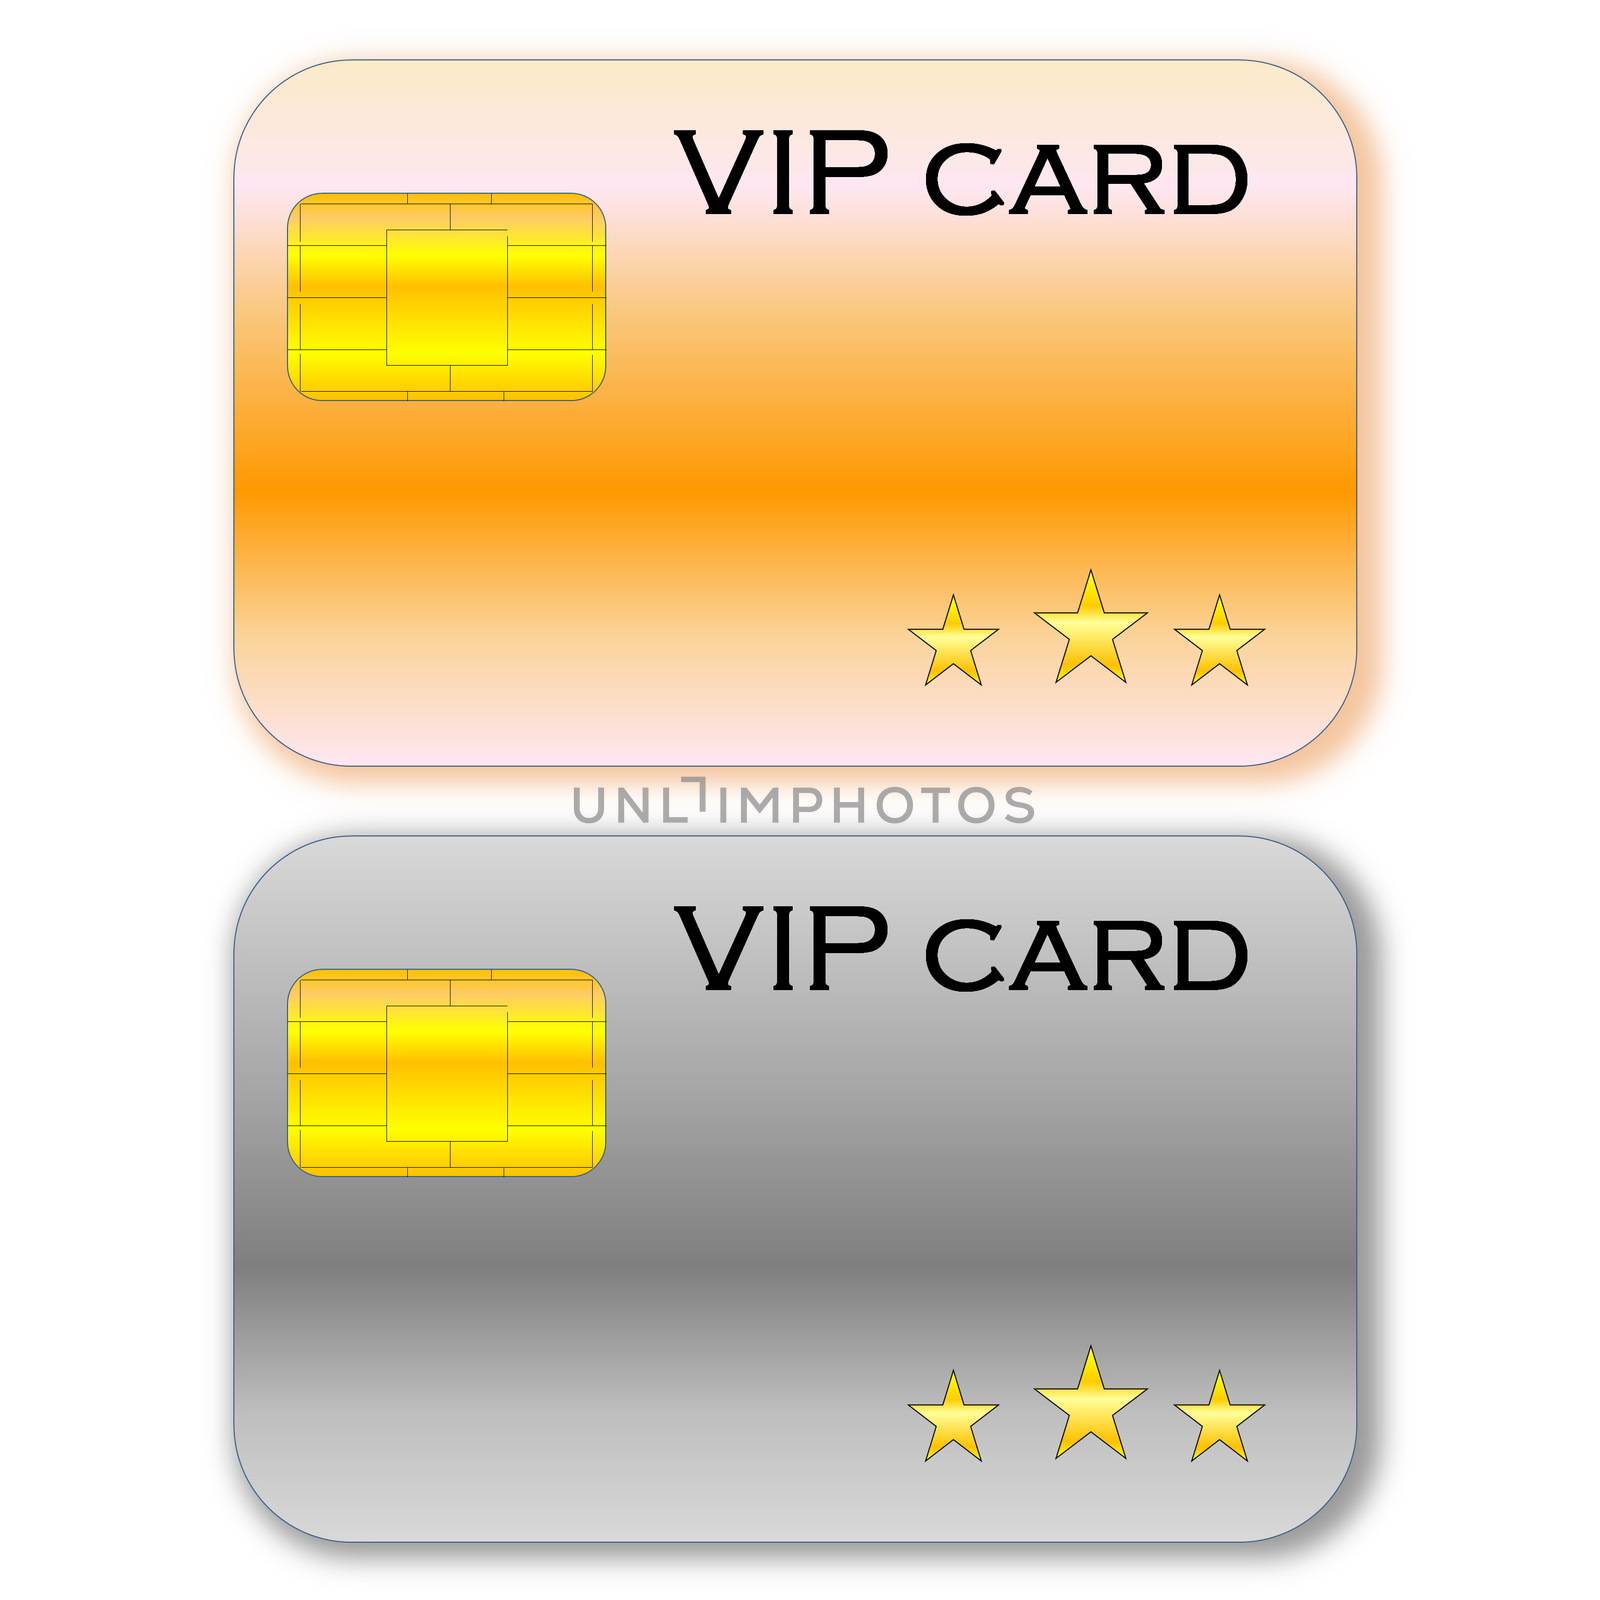 VIP cards by Elenaphotos21